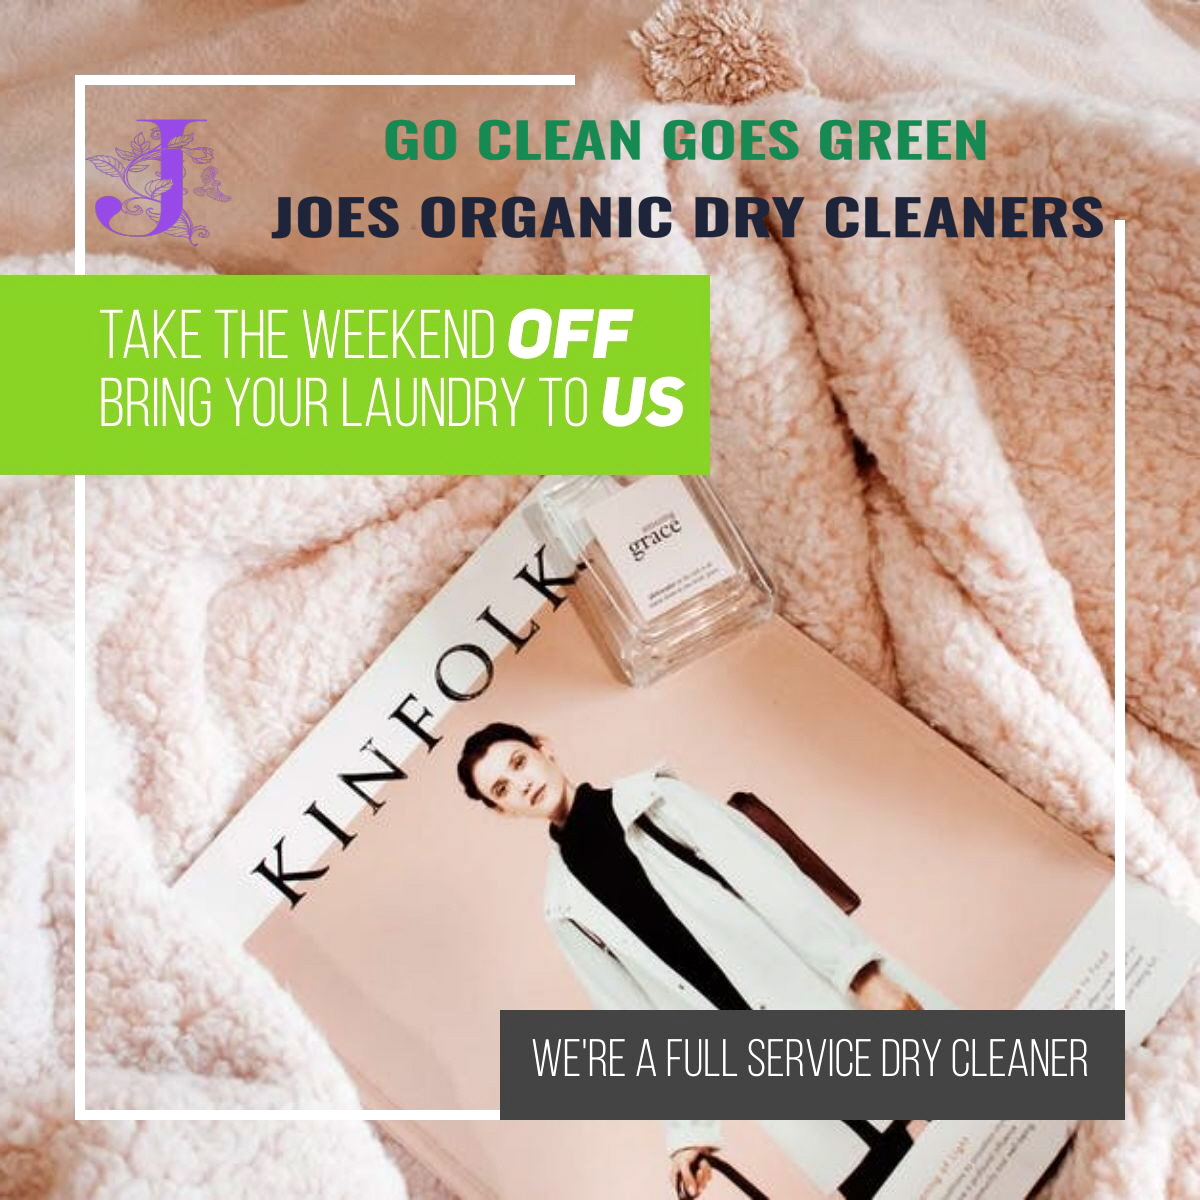 Joe's Organic Dry Cleaners